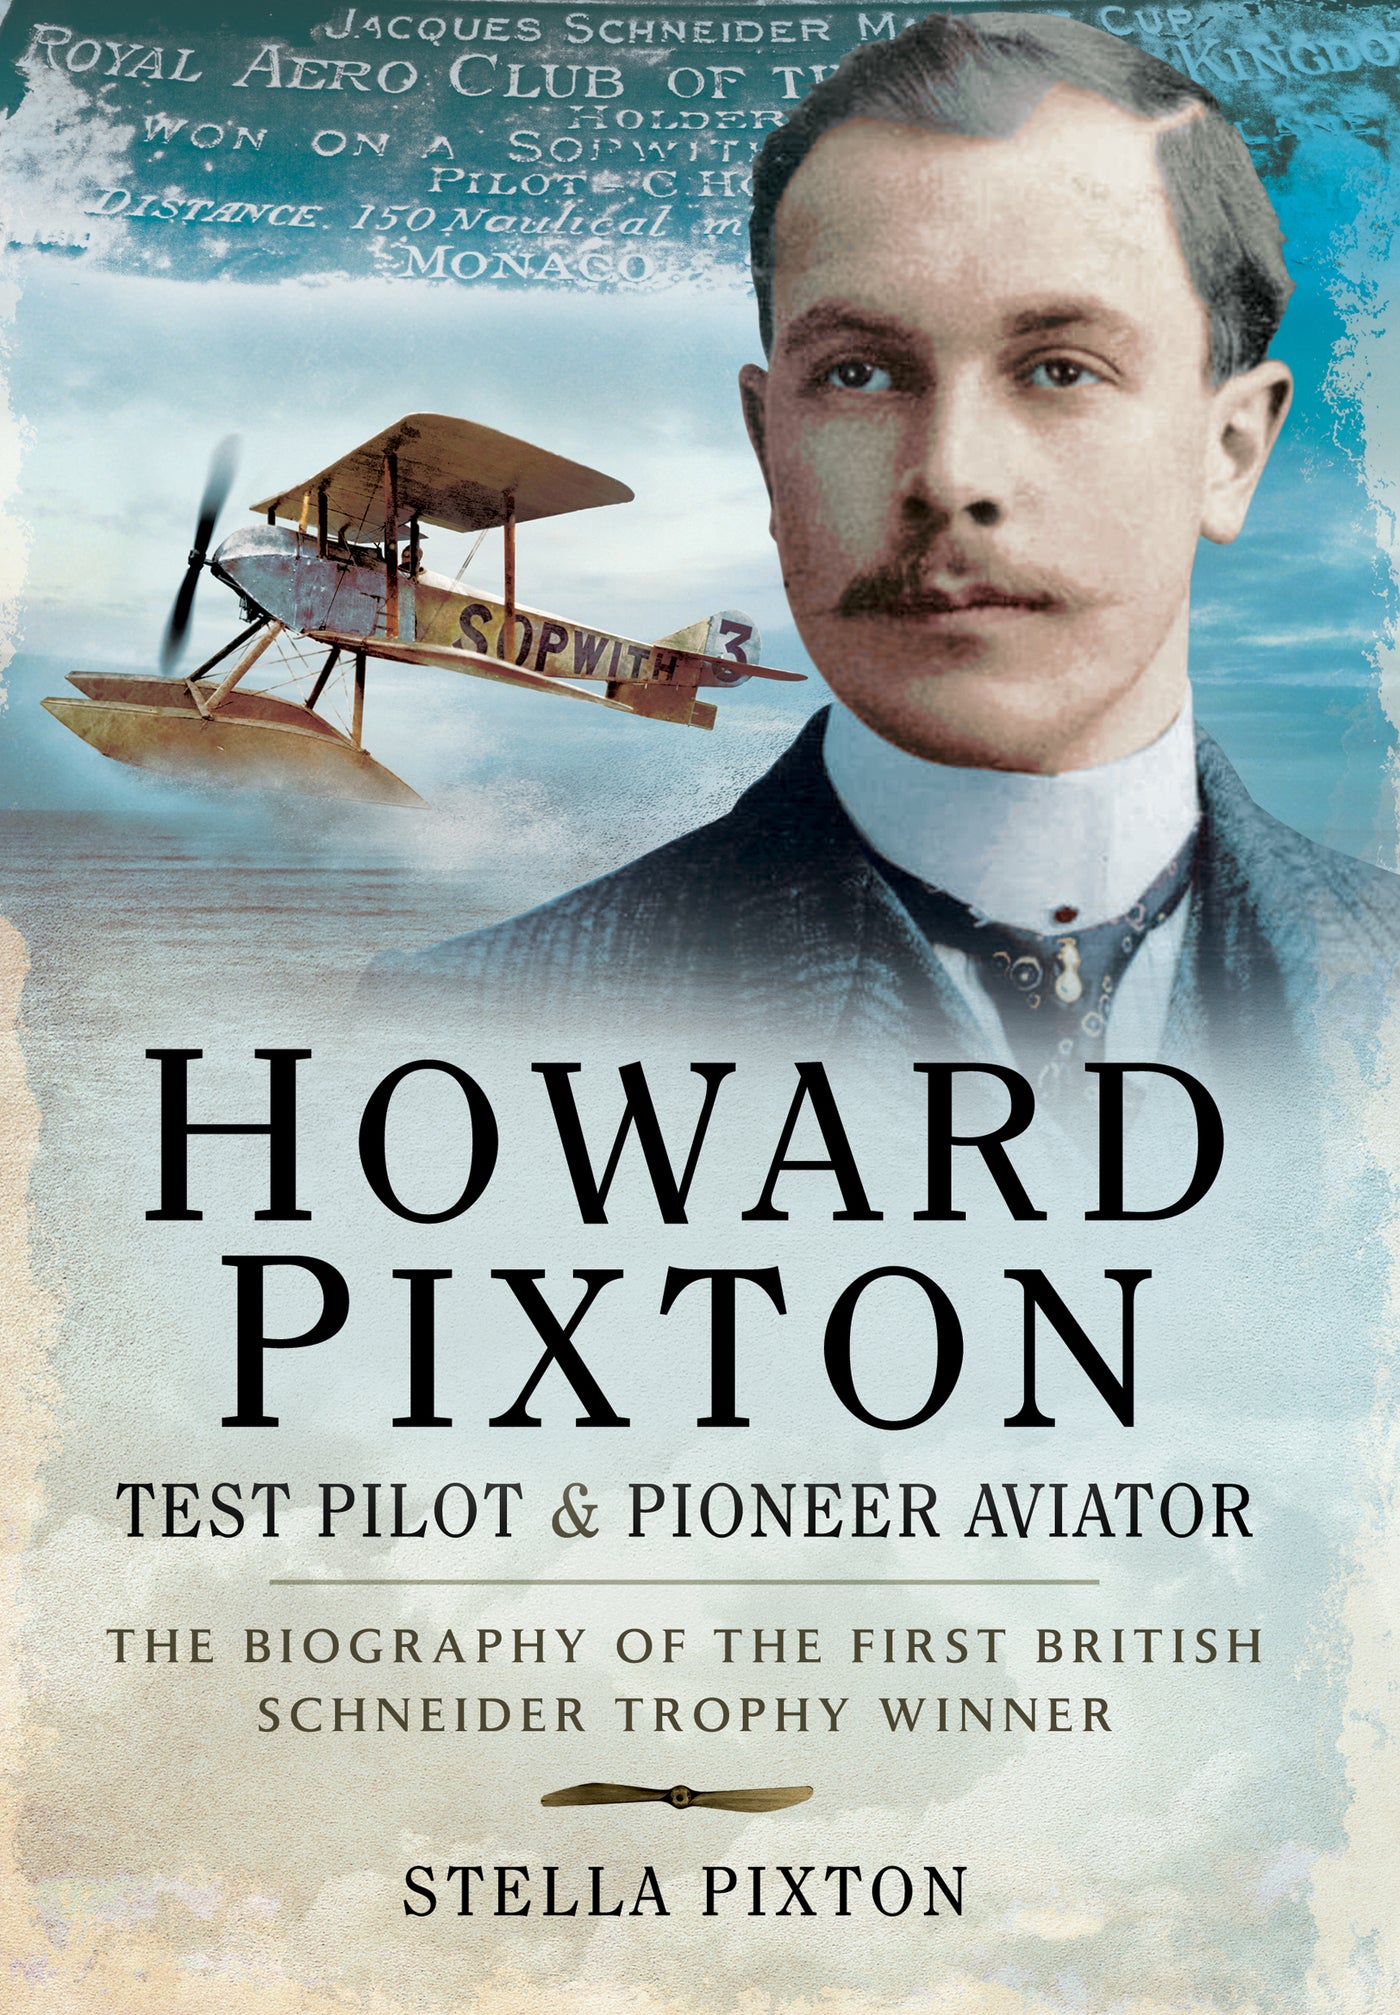 Howard Pixton - Test Pilot & Pioneer Aviator